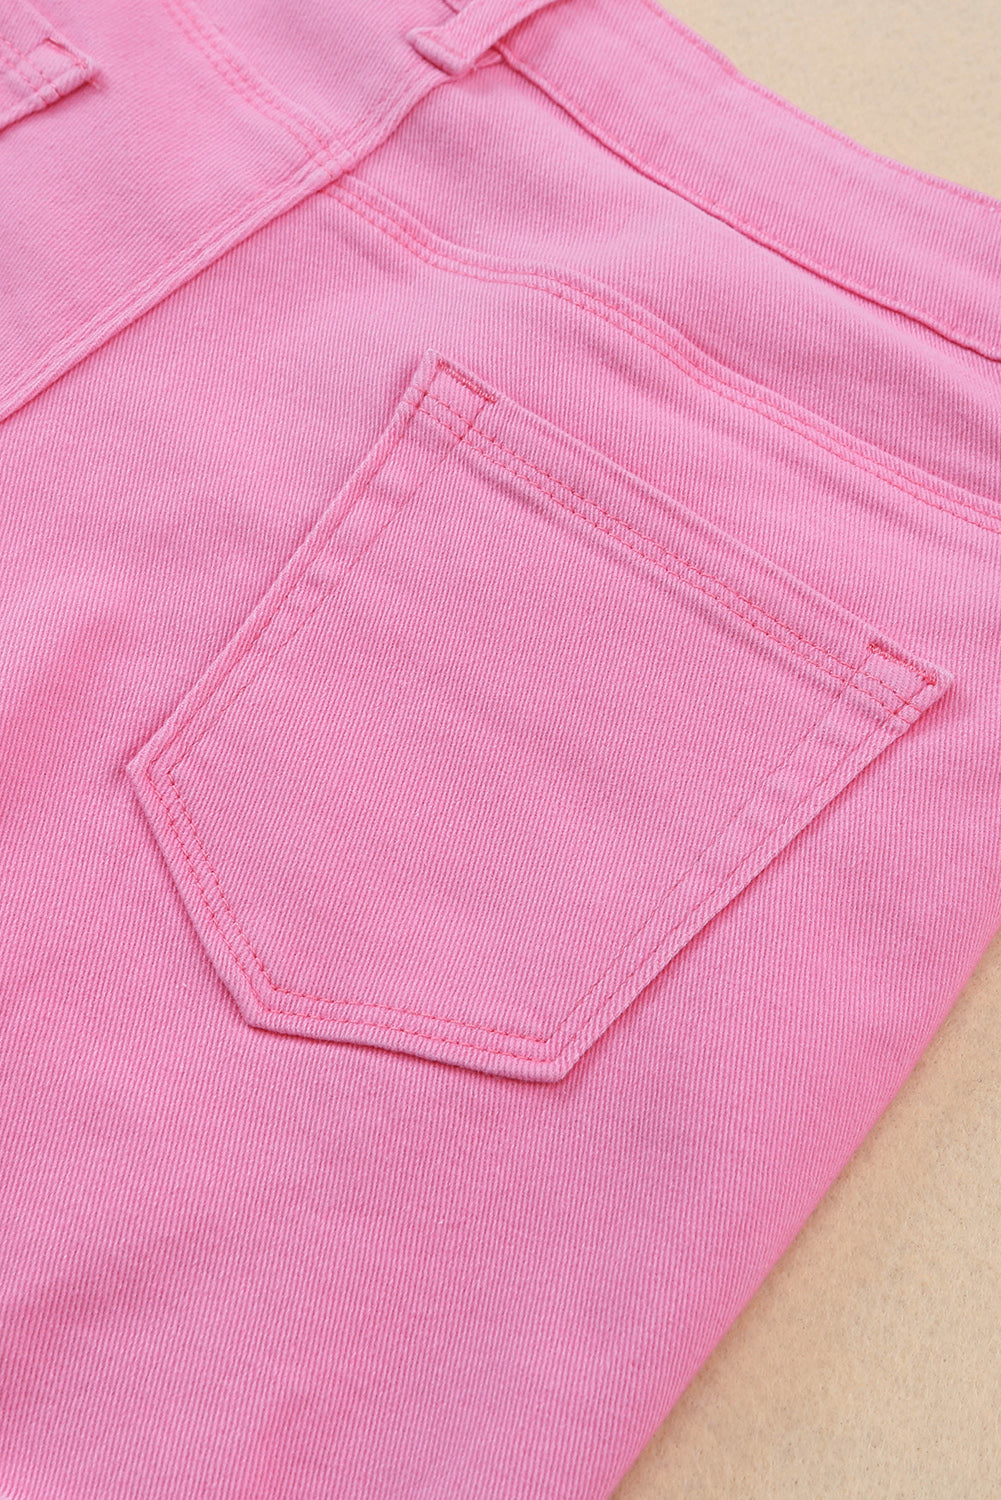 Pantaloncini in denim invecchiato tinta unita rosa